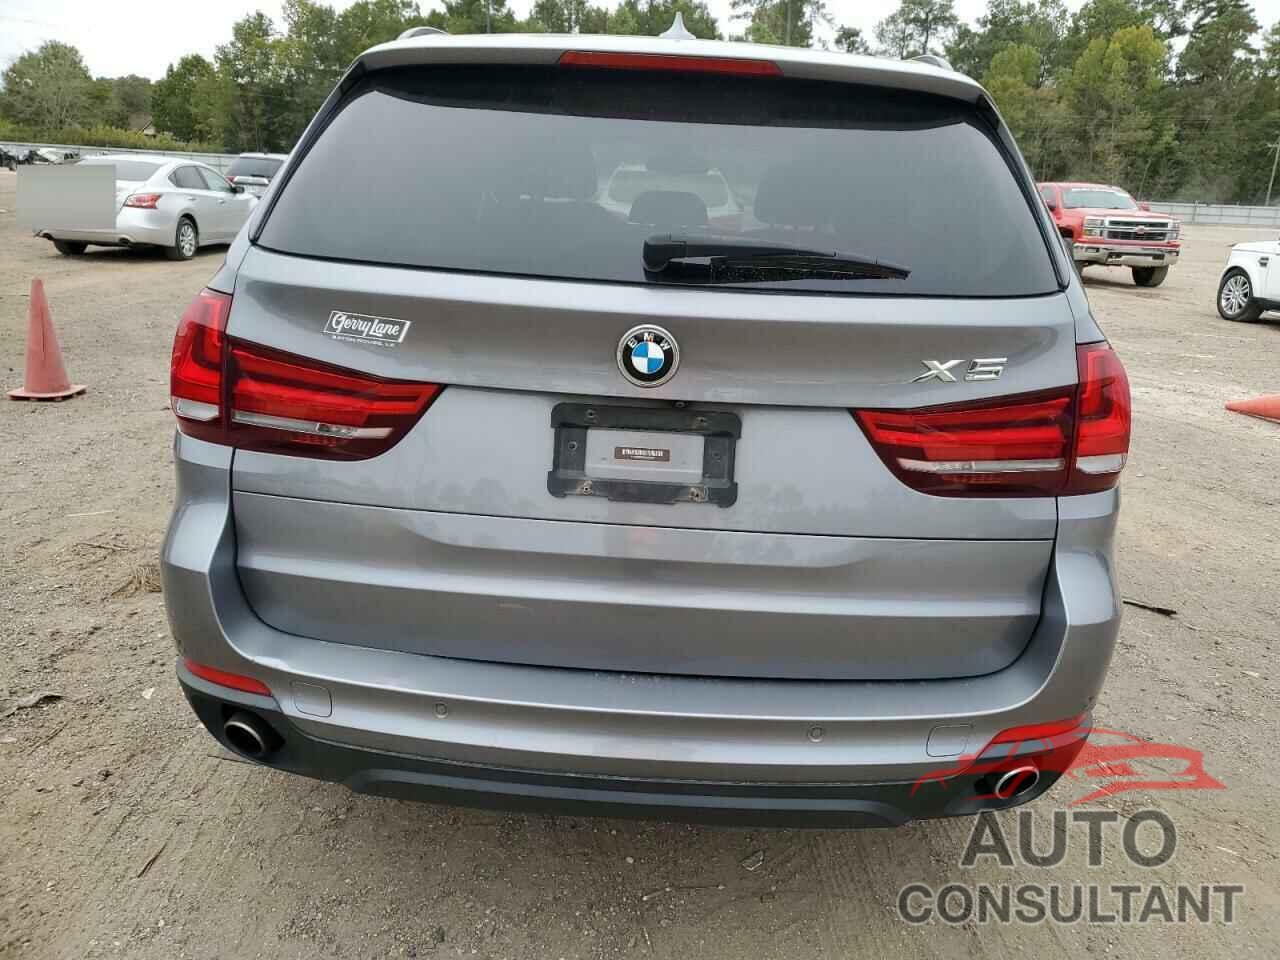 BMW X5 2016 - 5UXKR2C53G0R69513